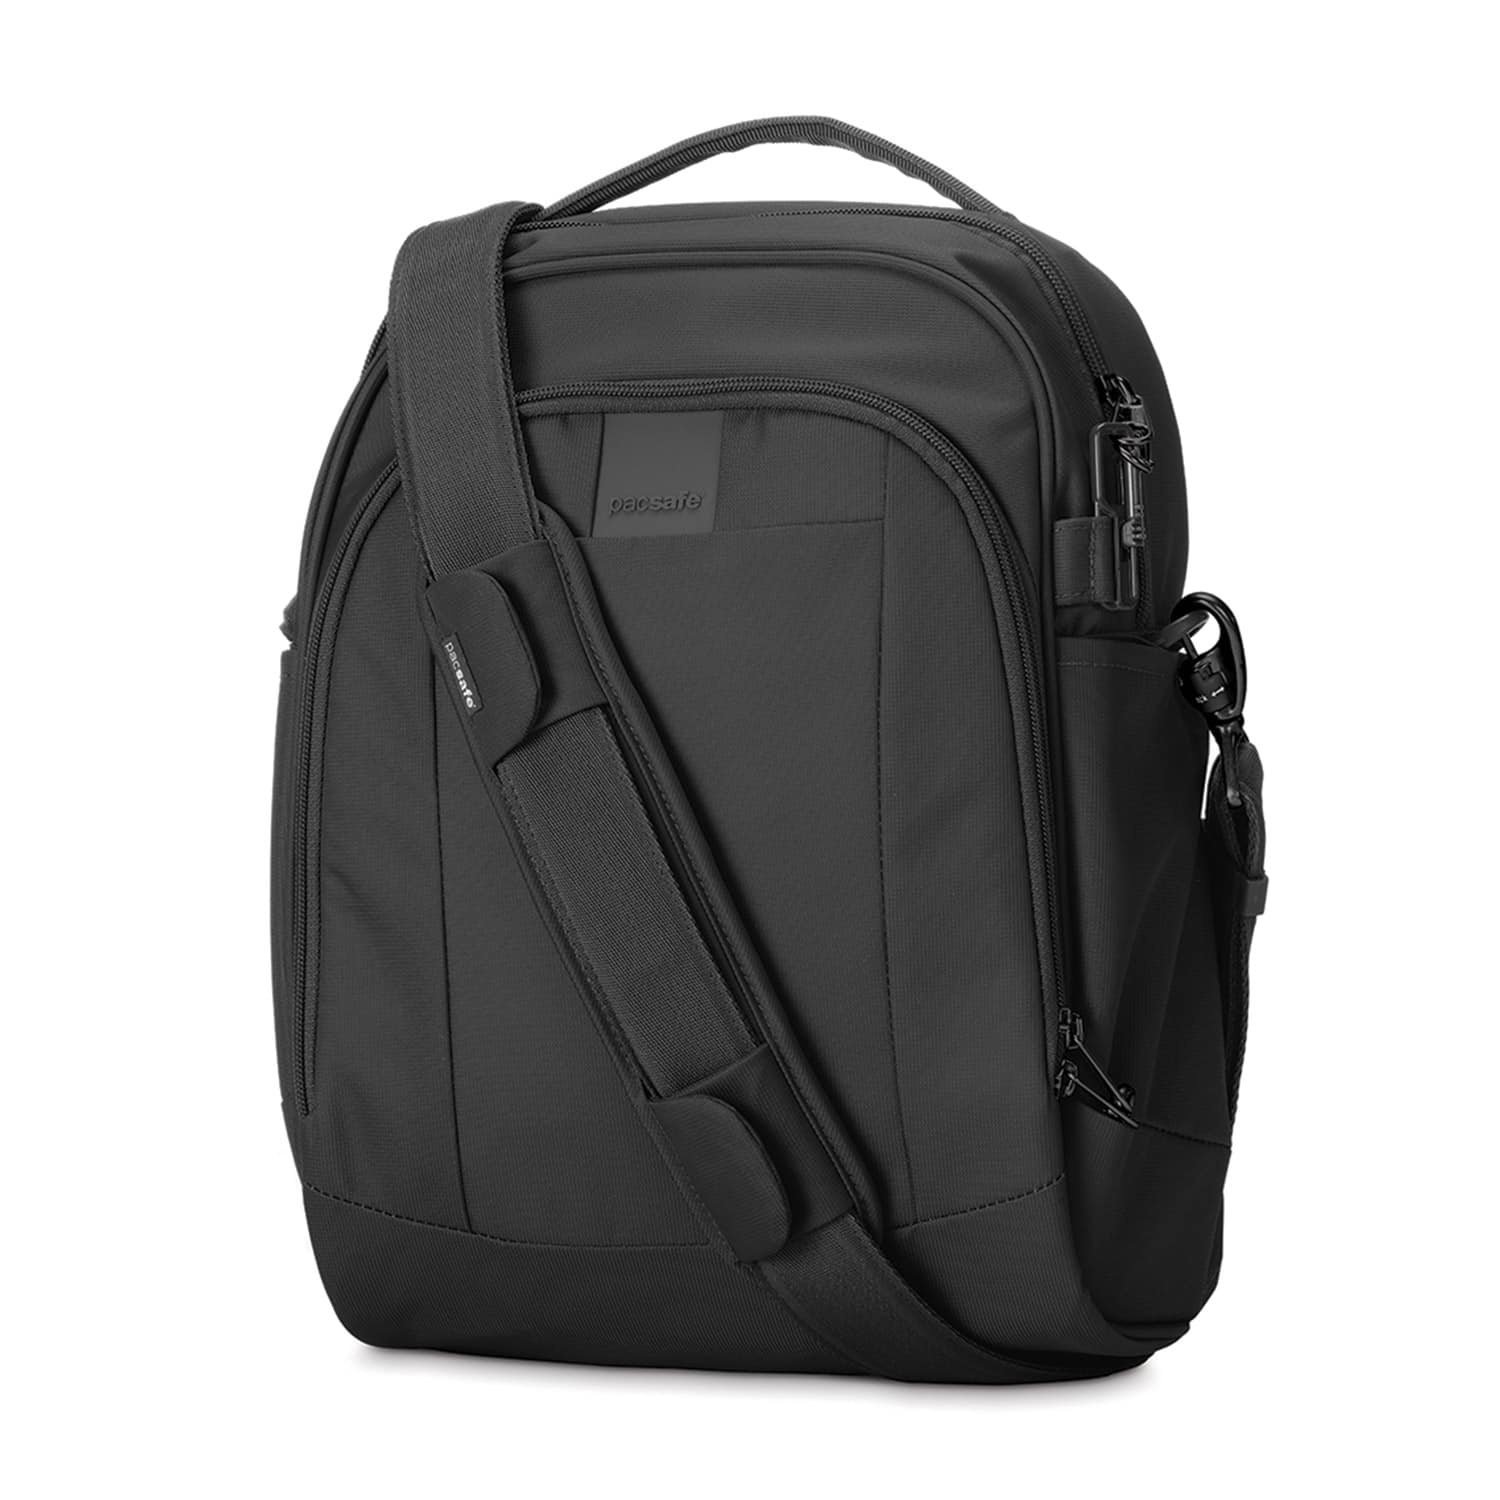 Best Anti-Theft Backpacks for Travel